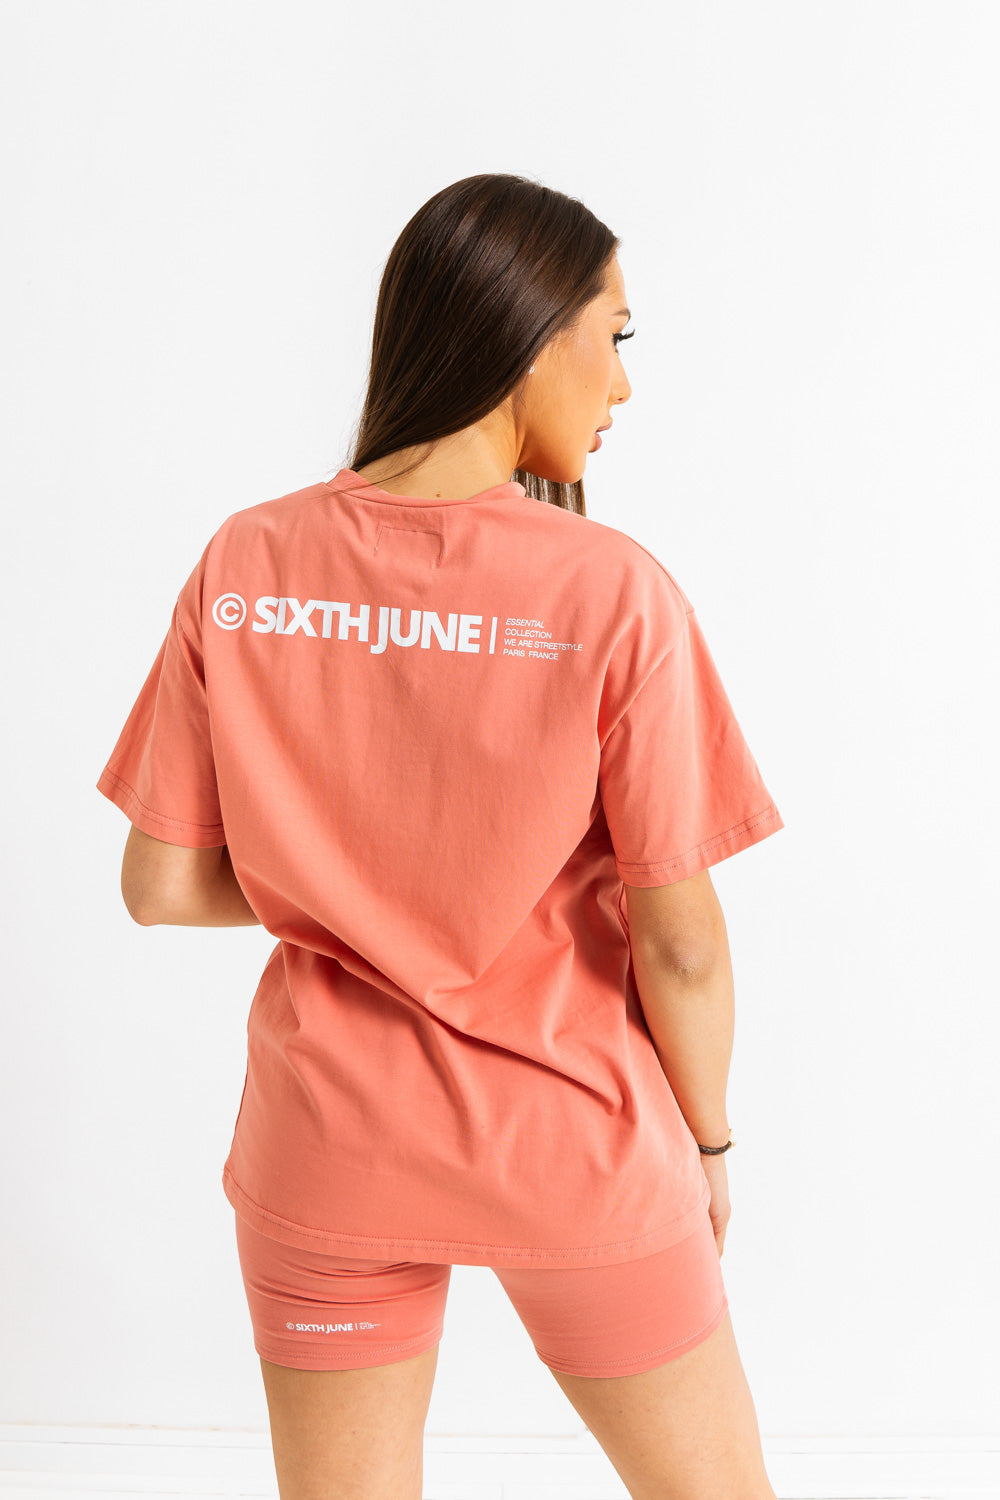 Sixth June - T-shirt double logo Rose